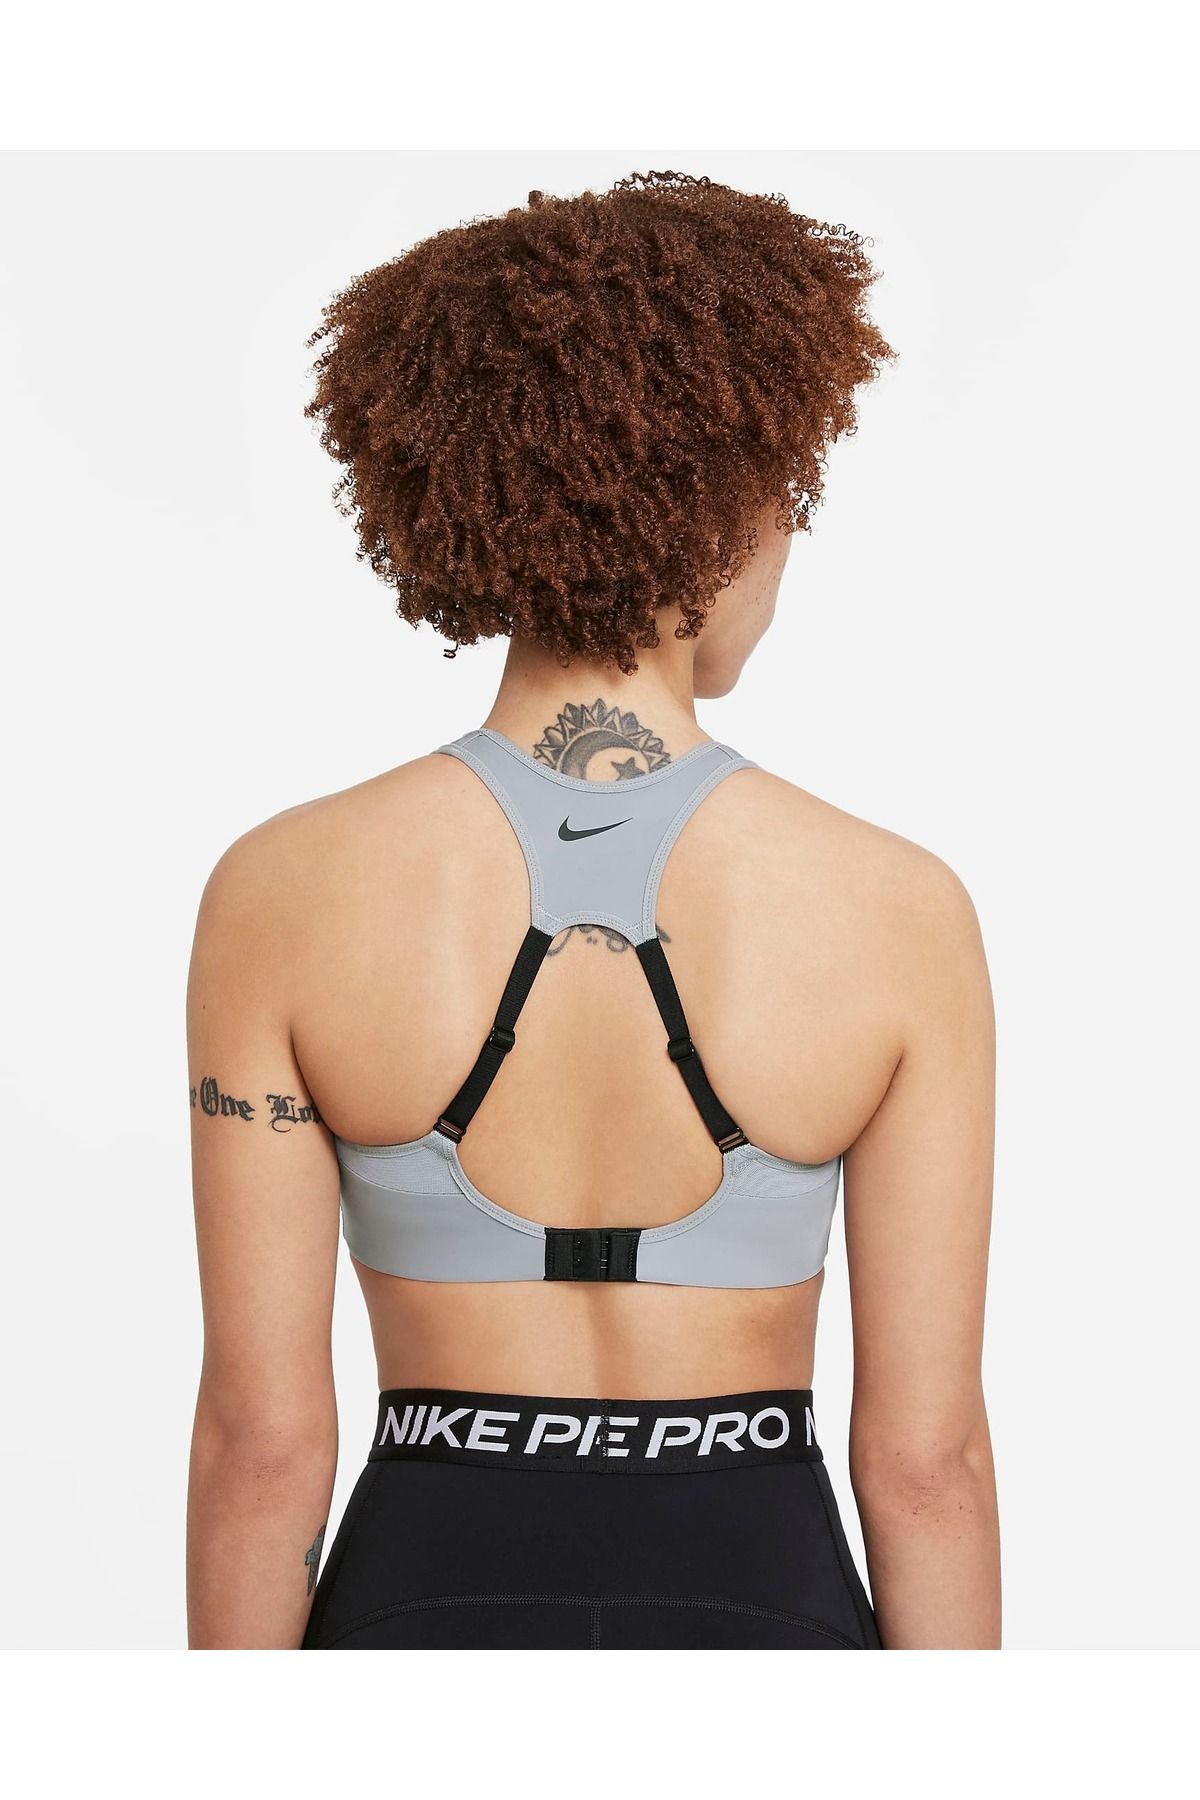 Nike Dri-fit Adv Alpha Ultrabreathe High Support Sports Kadın Bra Fiyatı,  Yorumları - Trendyol